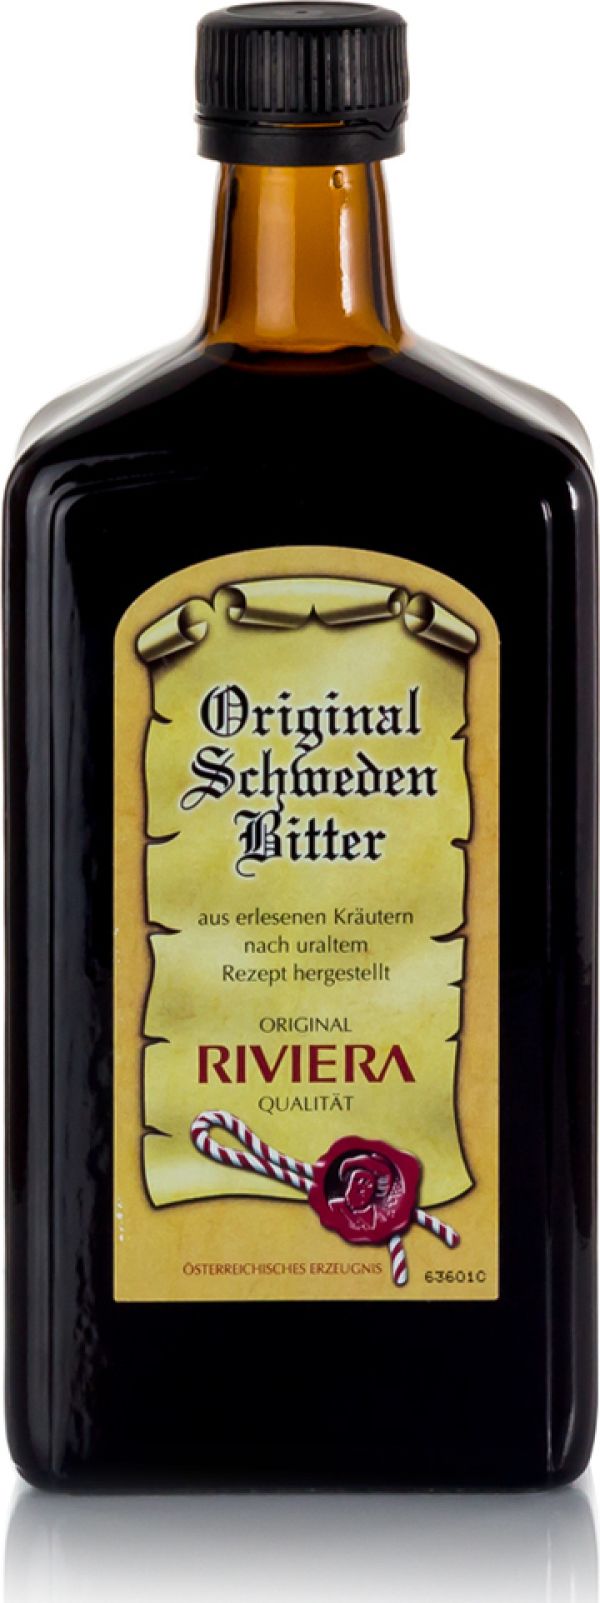 Original Schweden Bitter - Ελιξήριο Βοτάνων (30%Alc by Vol.) BIO